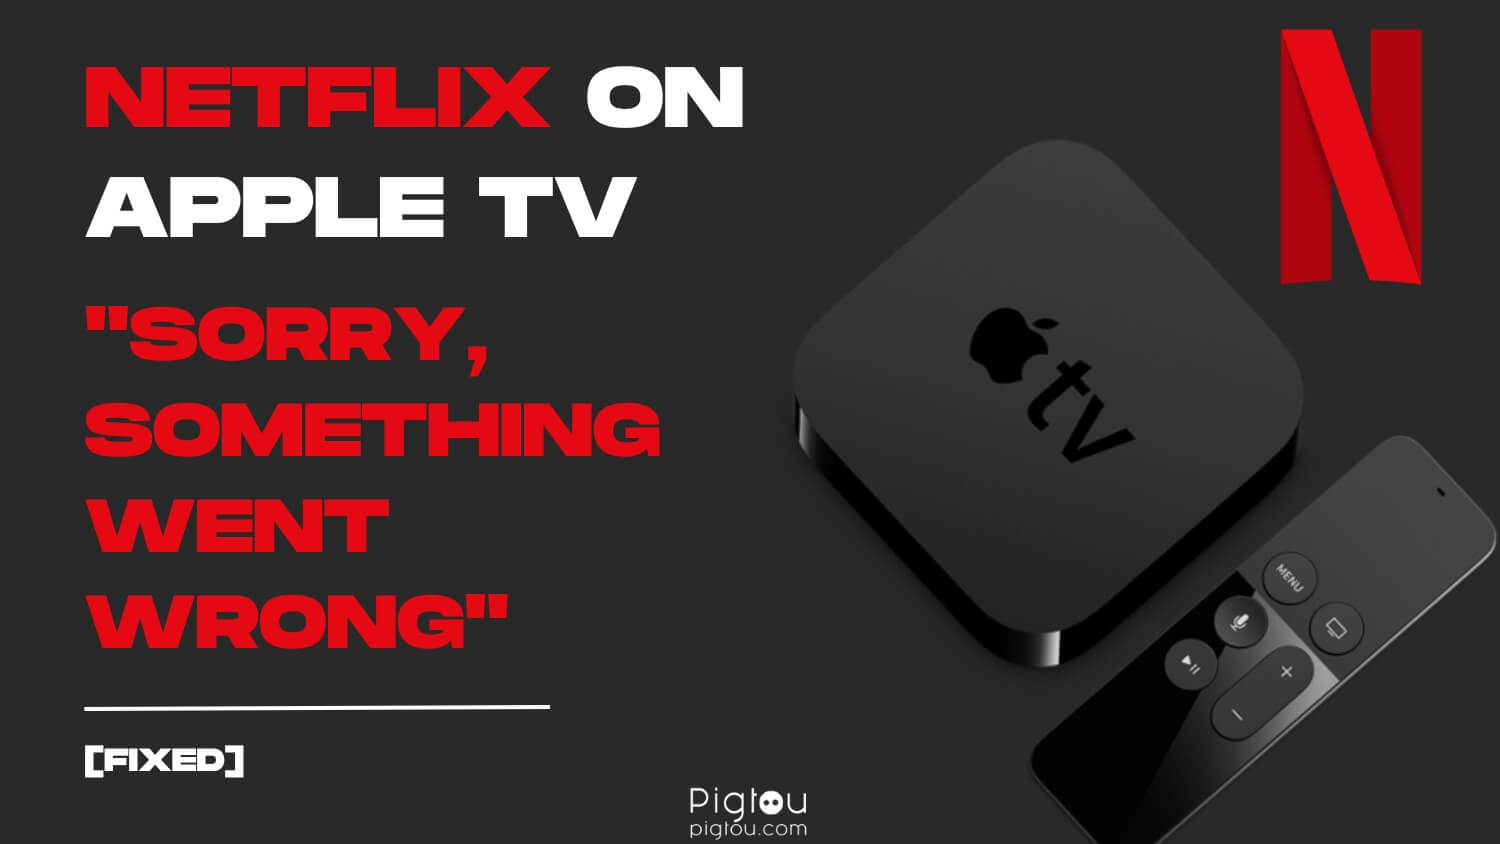 Netflix on Apple TV Sorry, something went wrong [FIXED!]